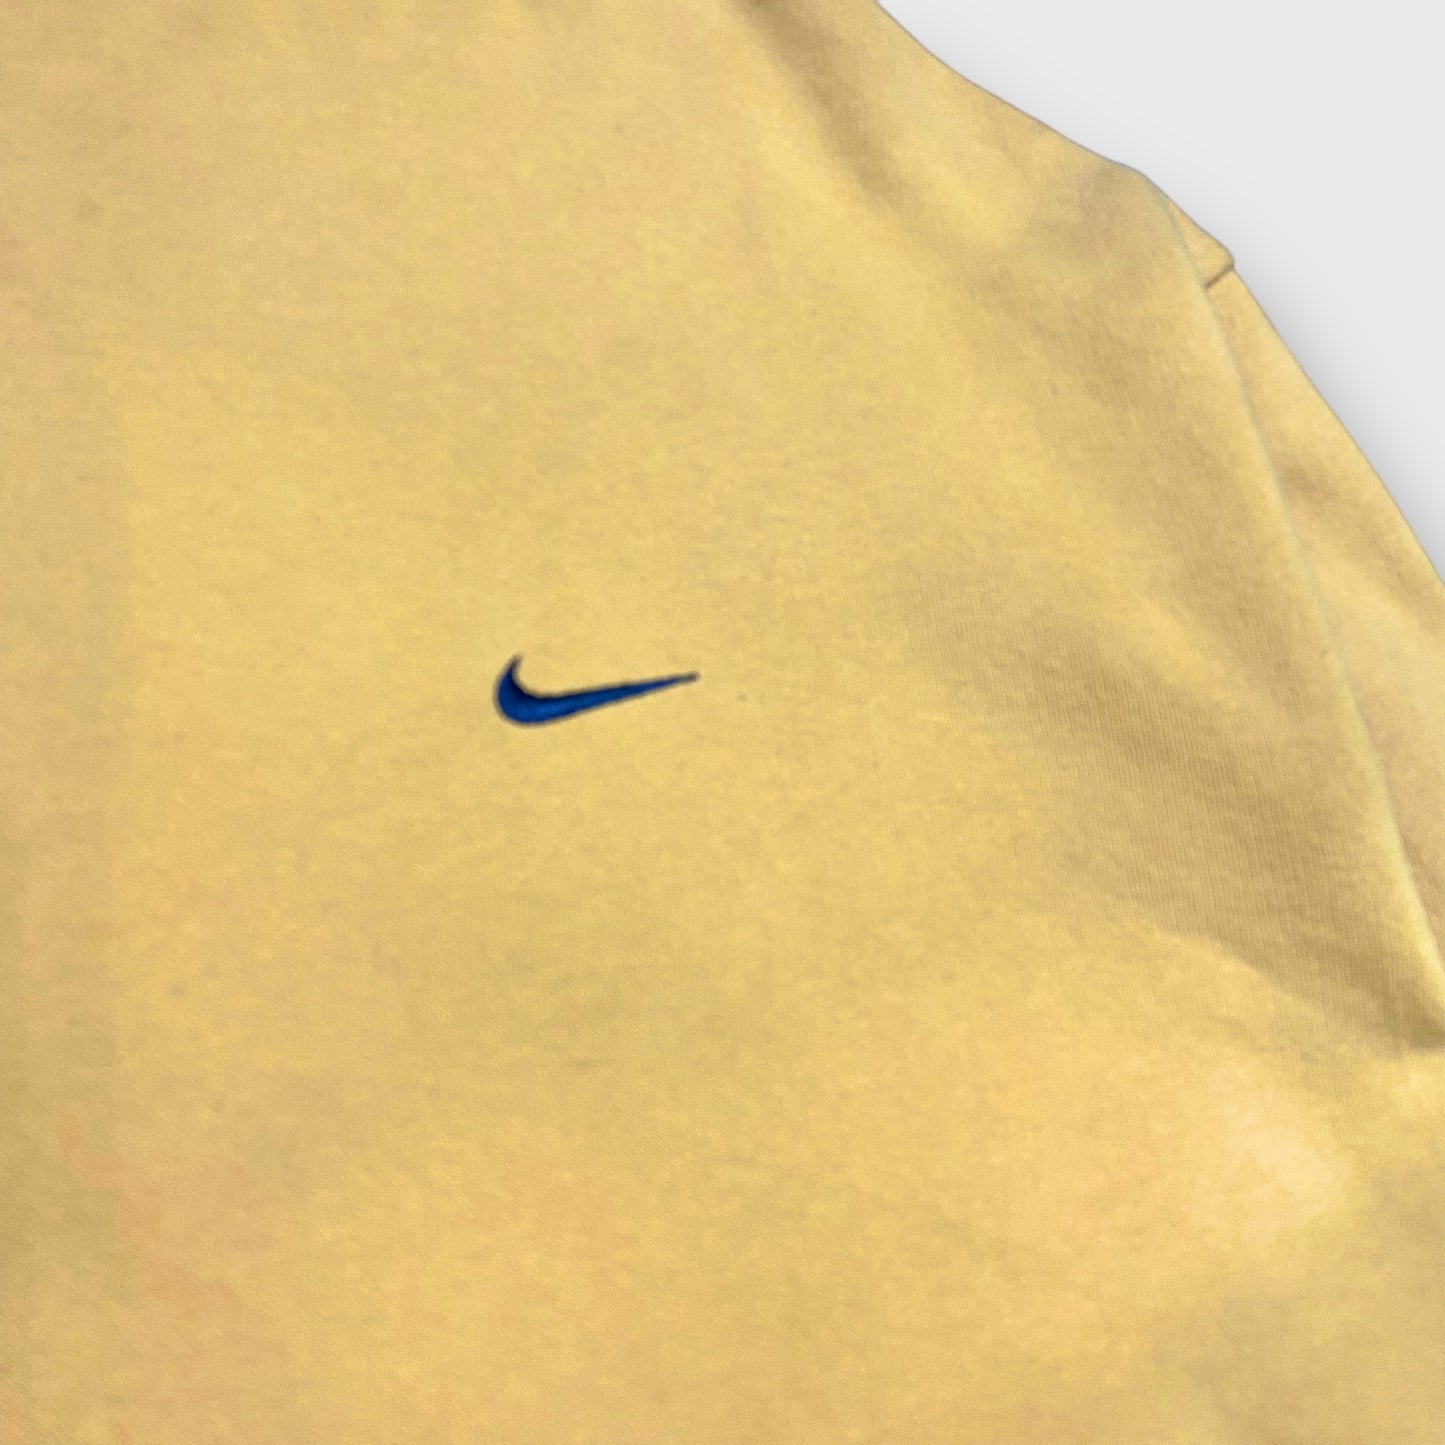 90-00's "NIKE" Yellow color logo sweat